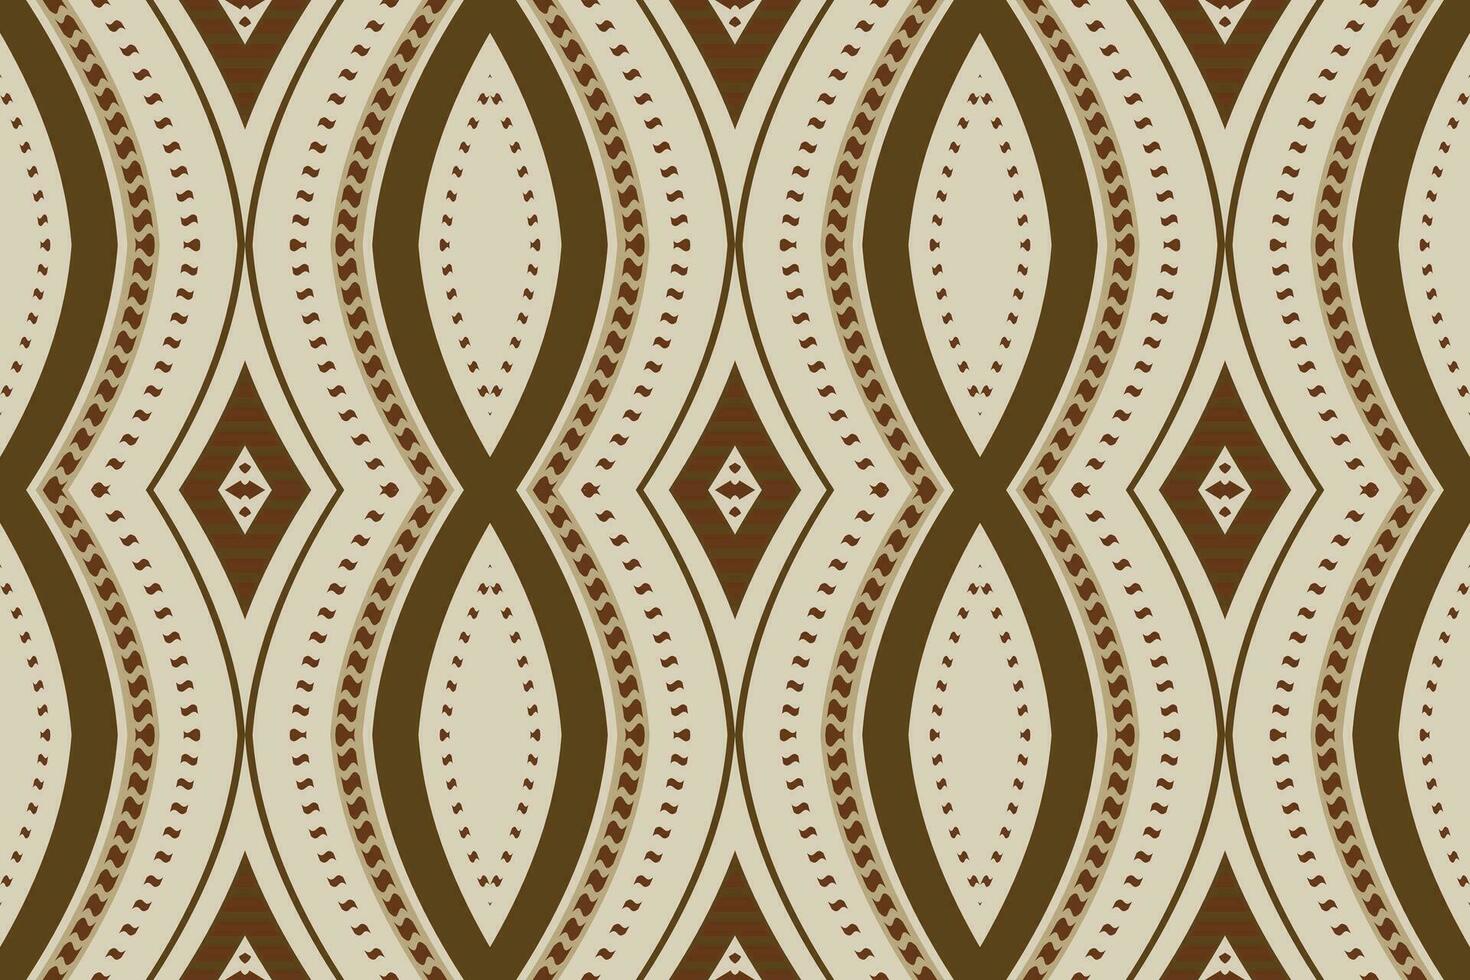 ikat damasco cachemir bordado antecedentes. ikat sin costura modelo geométrico étnico oriental modelo tradicional.azteca estilo resumen vector diseño para textura,tela,ropa,envoltura,pareo.